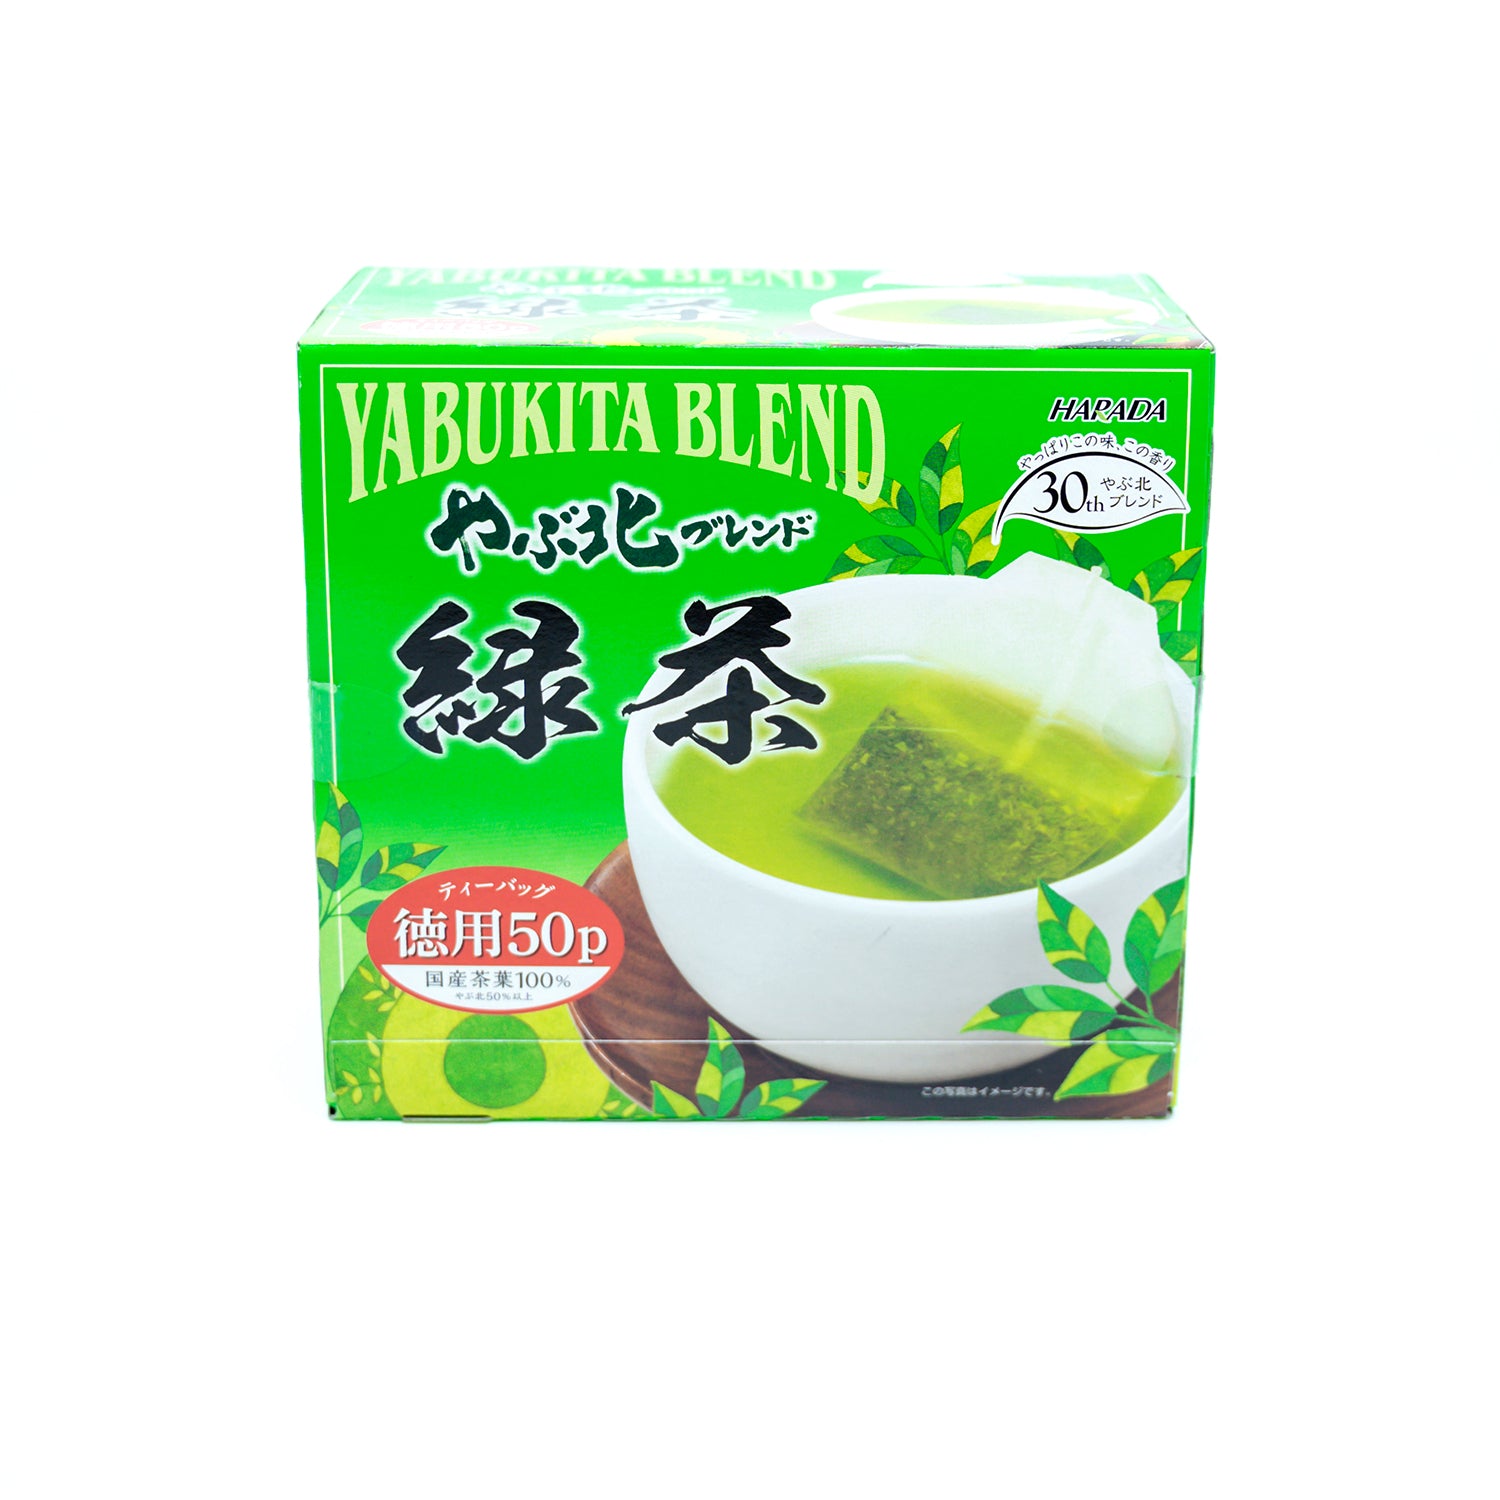 YABUKITA SENCHA GREEN TEA 50pc TEA BAGS